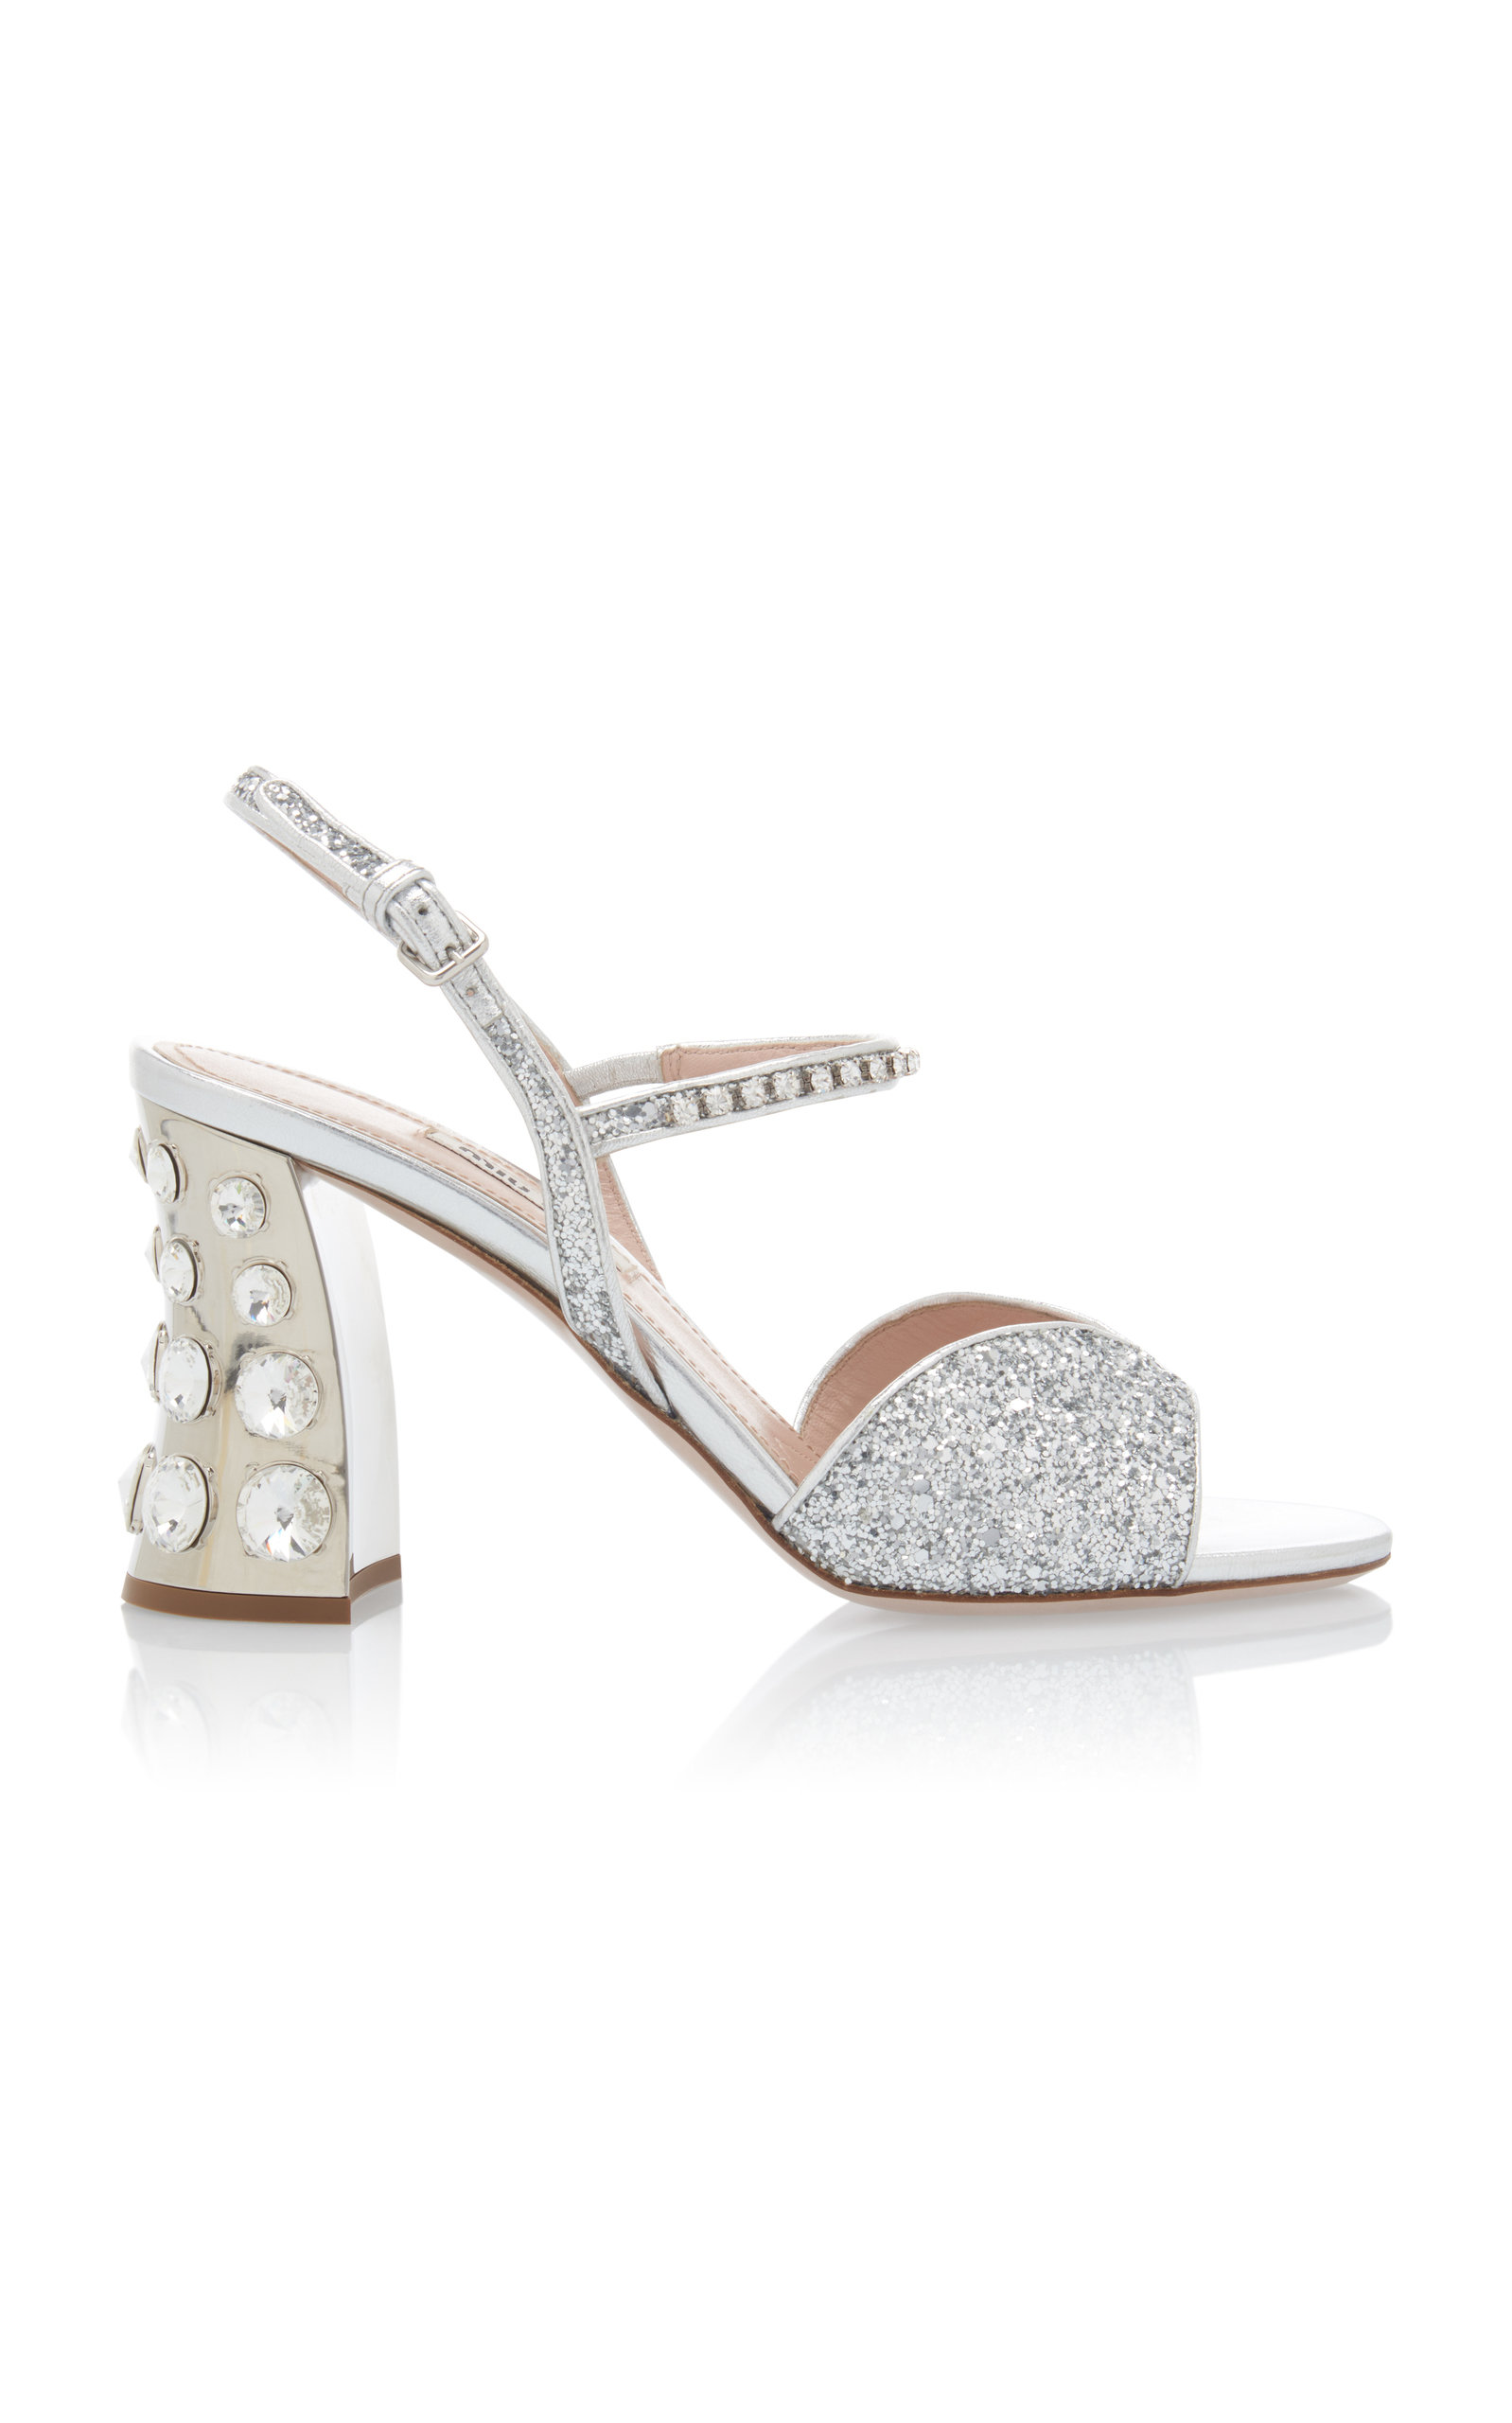 sparkly block heel shoes